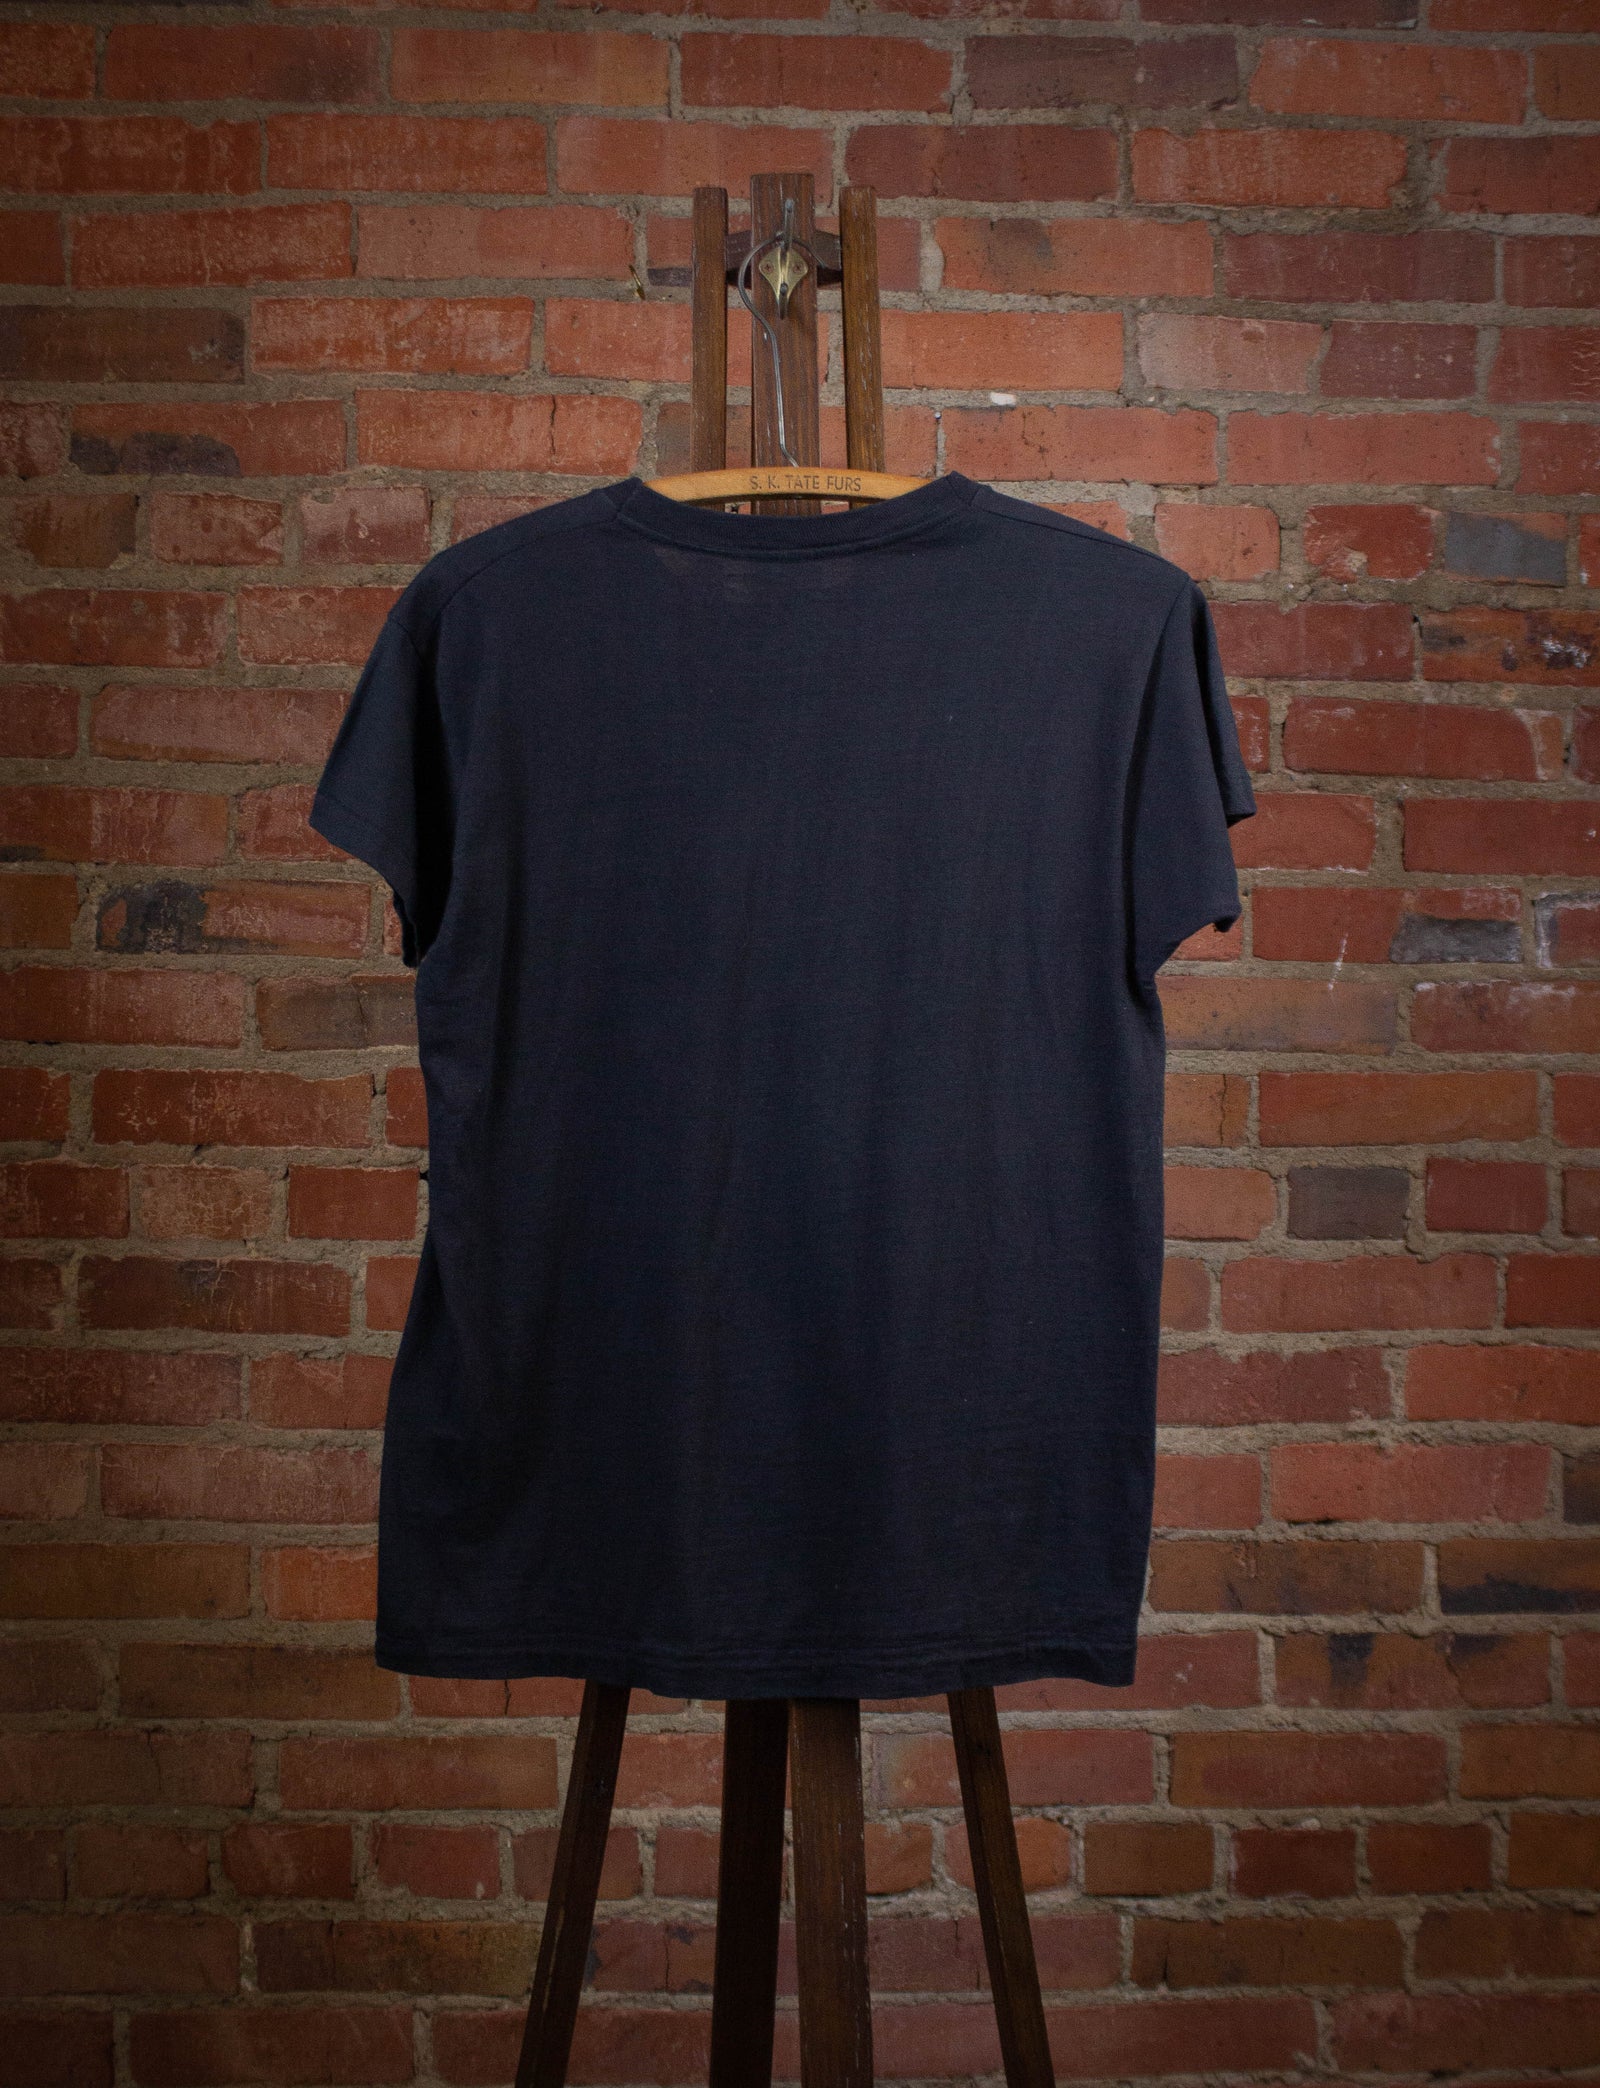 Bee Gees T Shirt Music T Shirt Vintage Musical Shirt made In USA cotton  casual Men t shirt Women's tee shirts tops